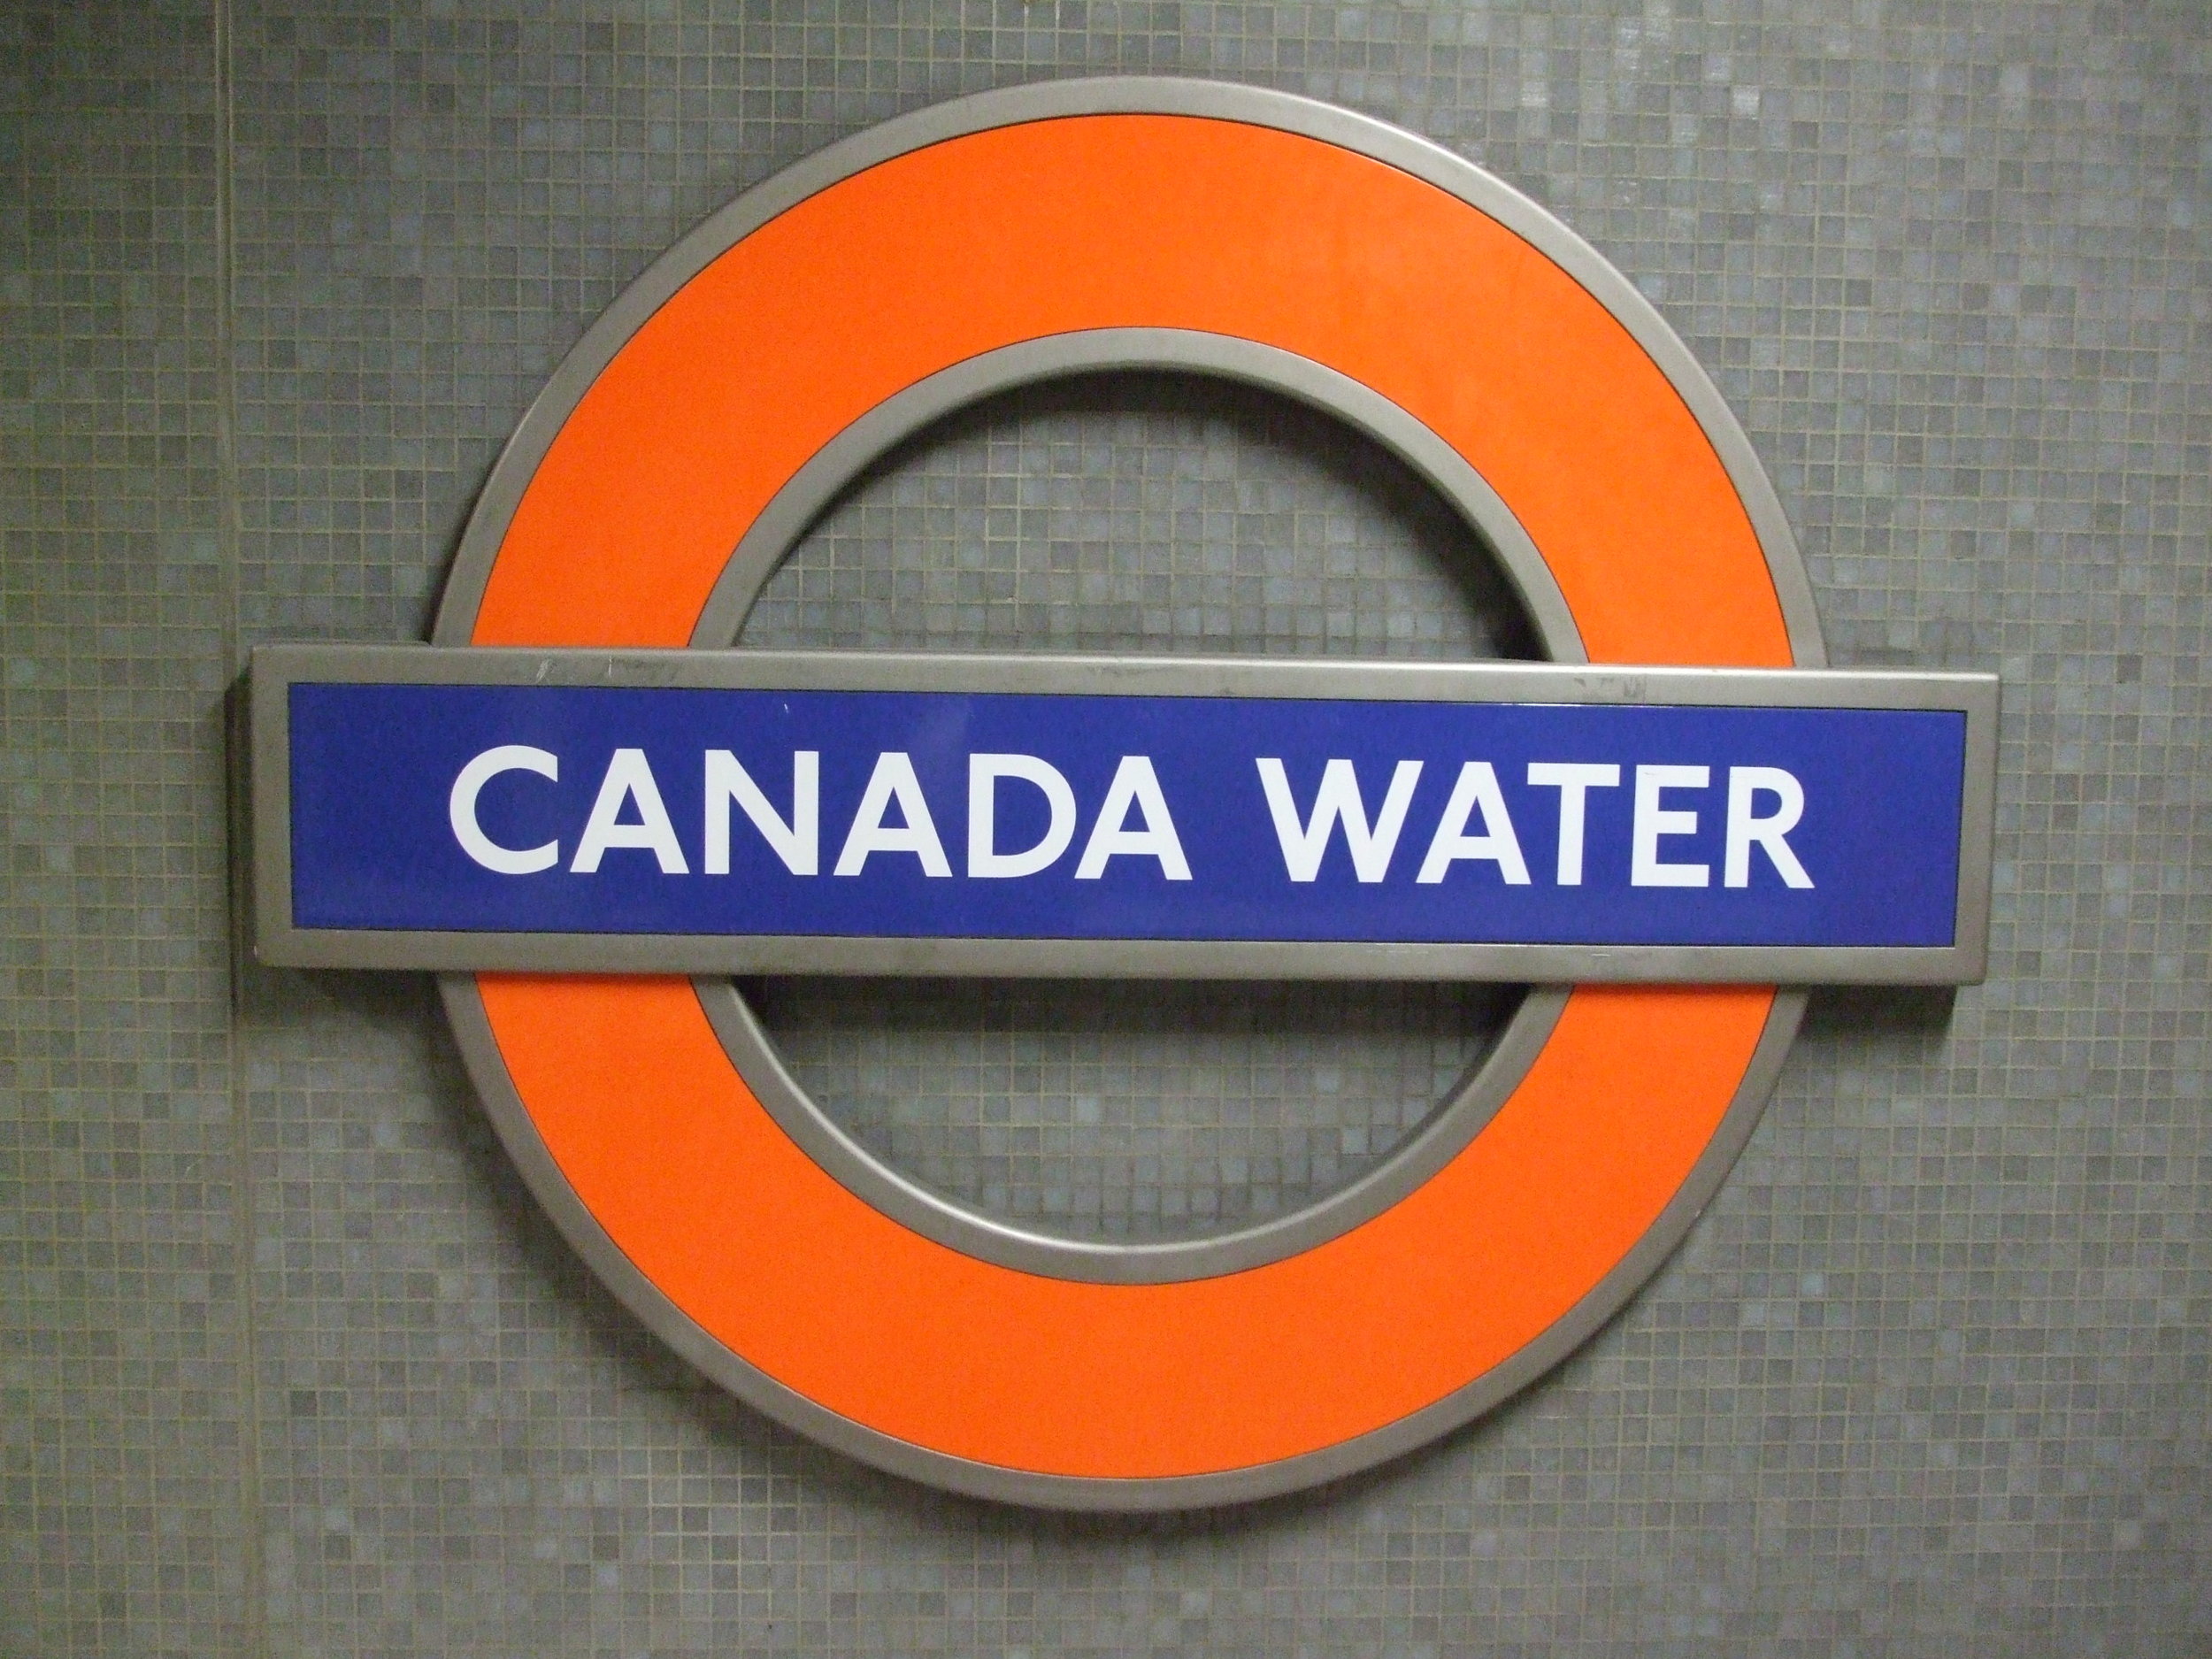 Canada Water Tube Sign.jpg